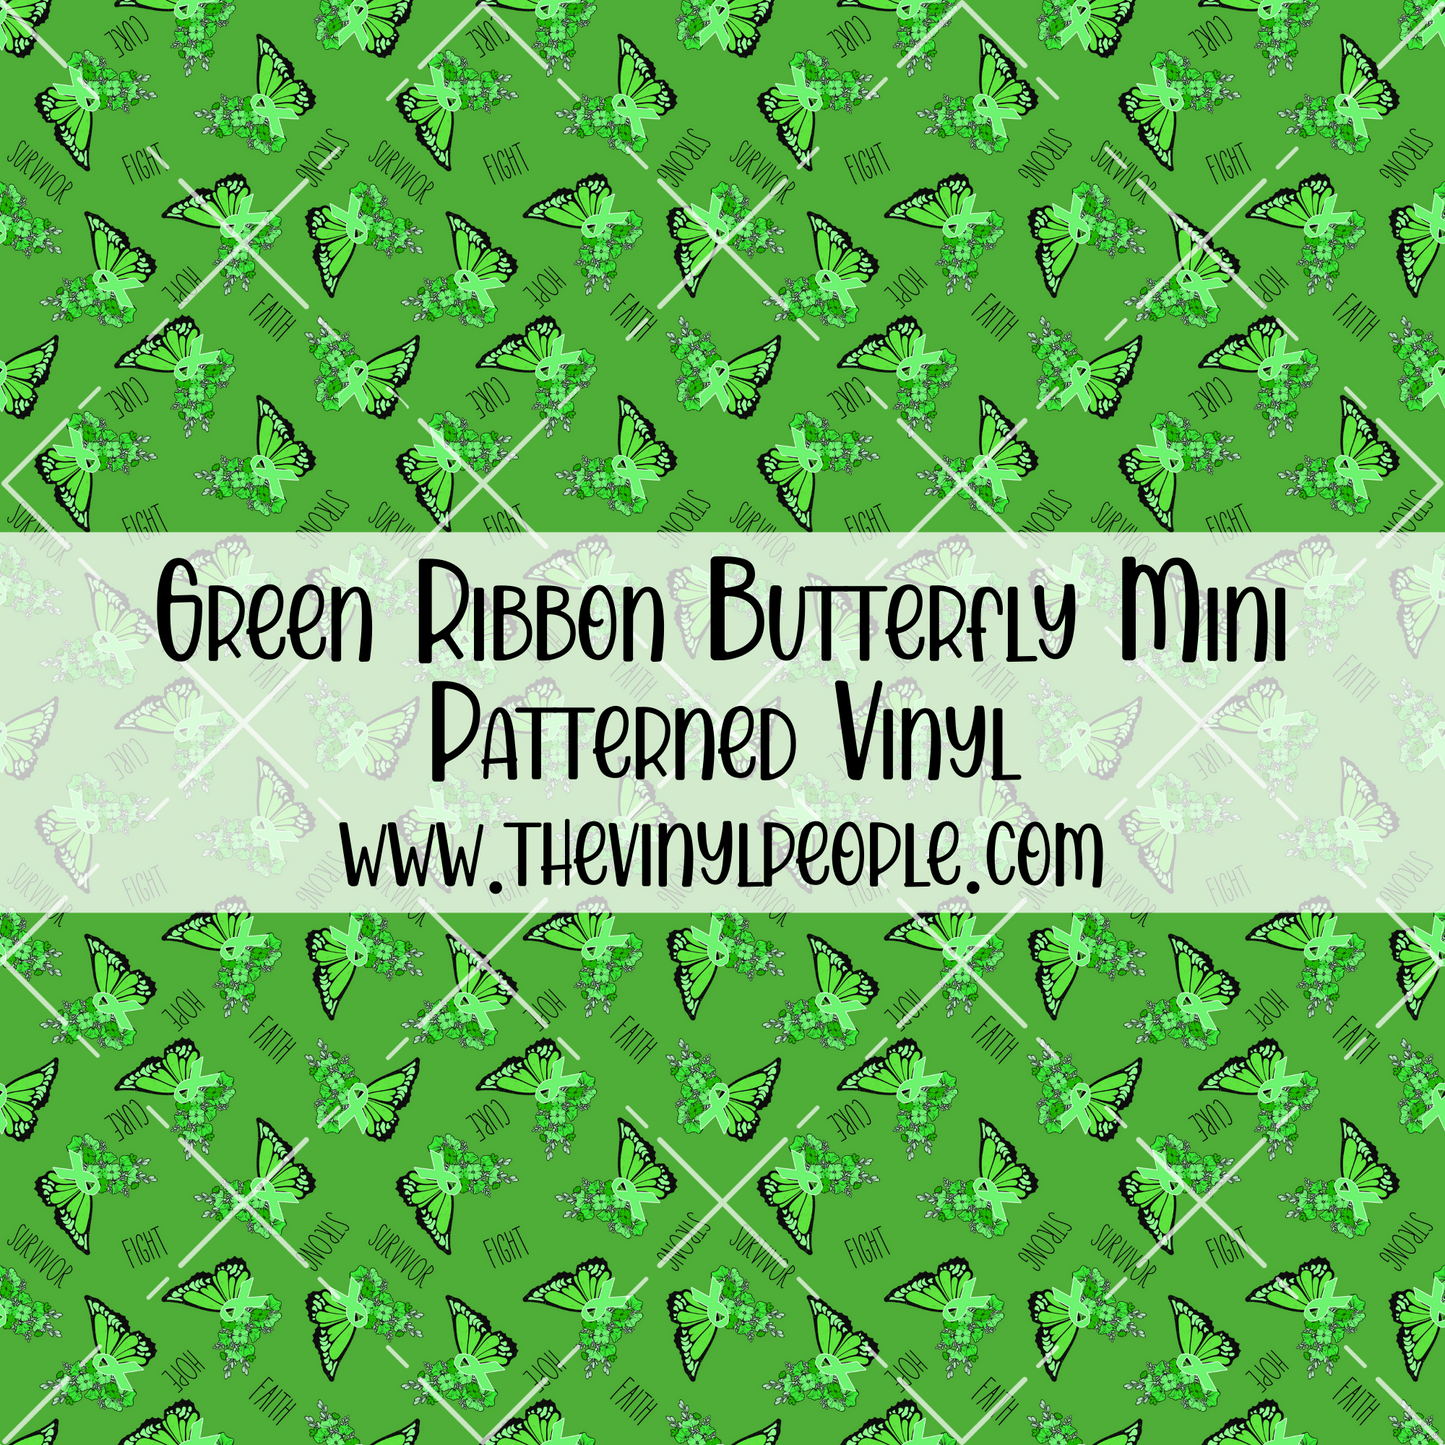 Green Ribbon Butterfly Patterned Vinyl